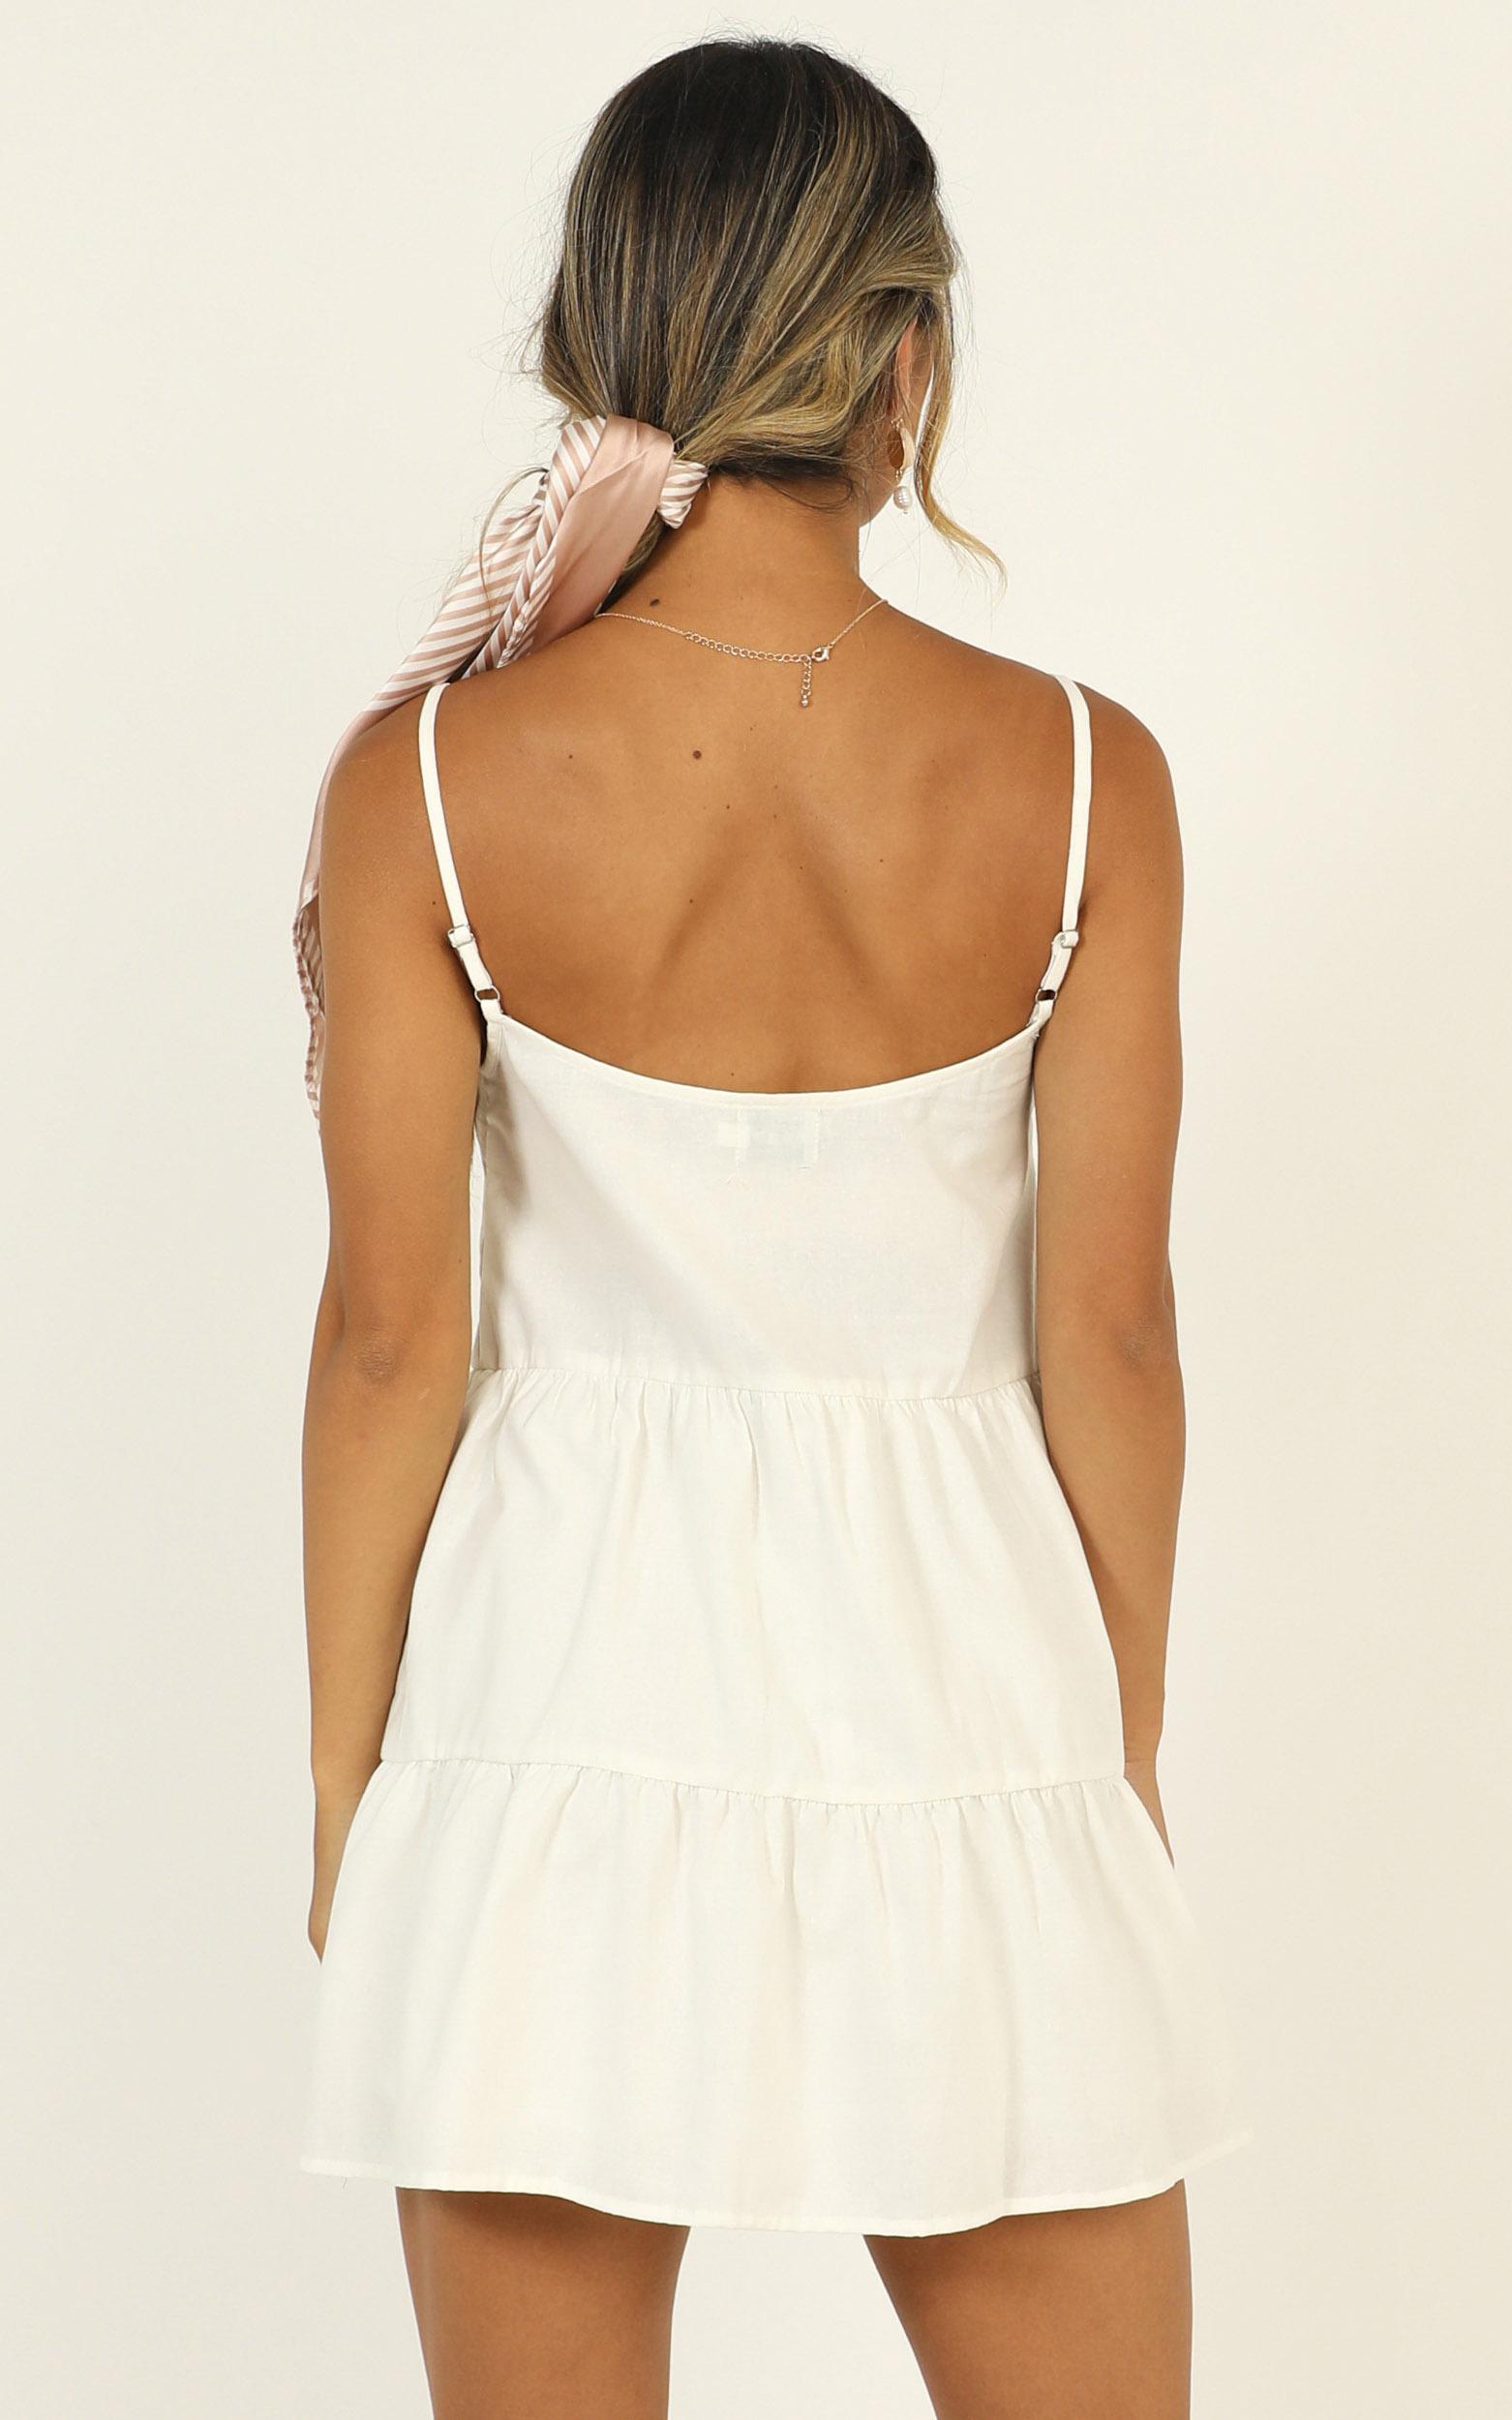 white linen strappy dress